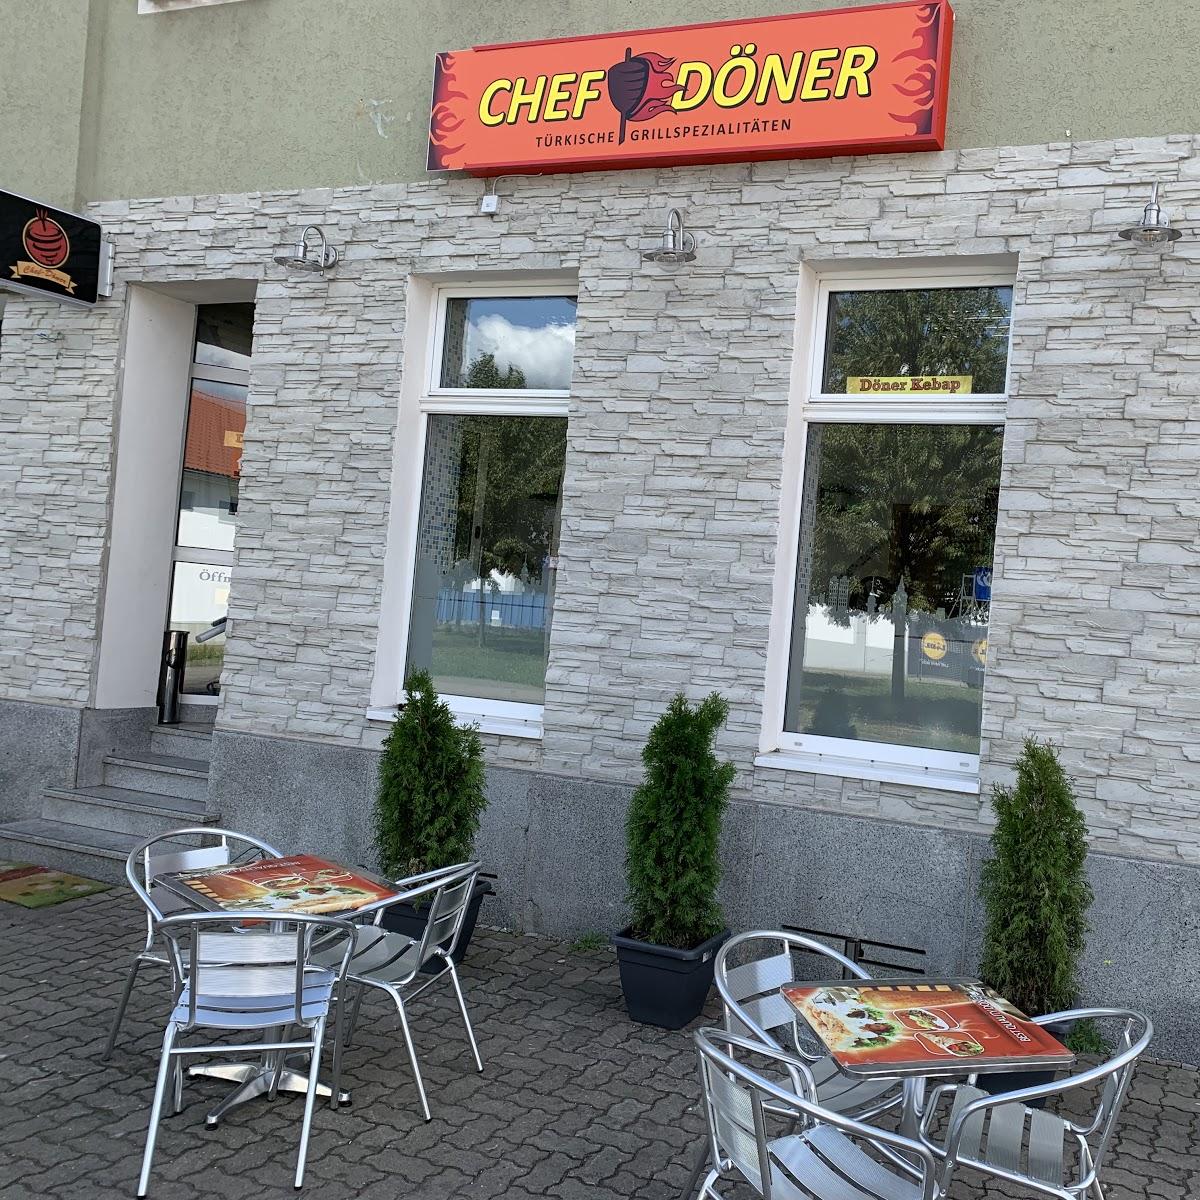 Restaurant "Chef Döner" in Dessau-Roßlau